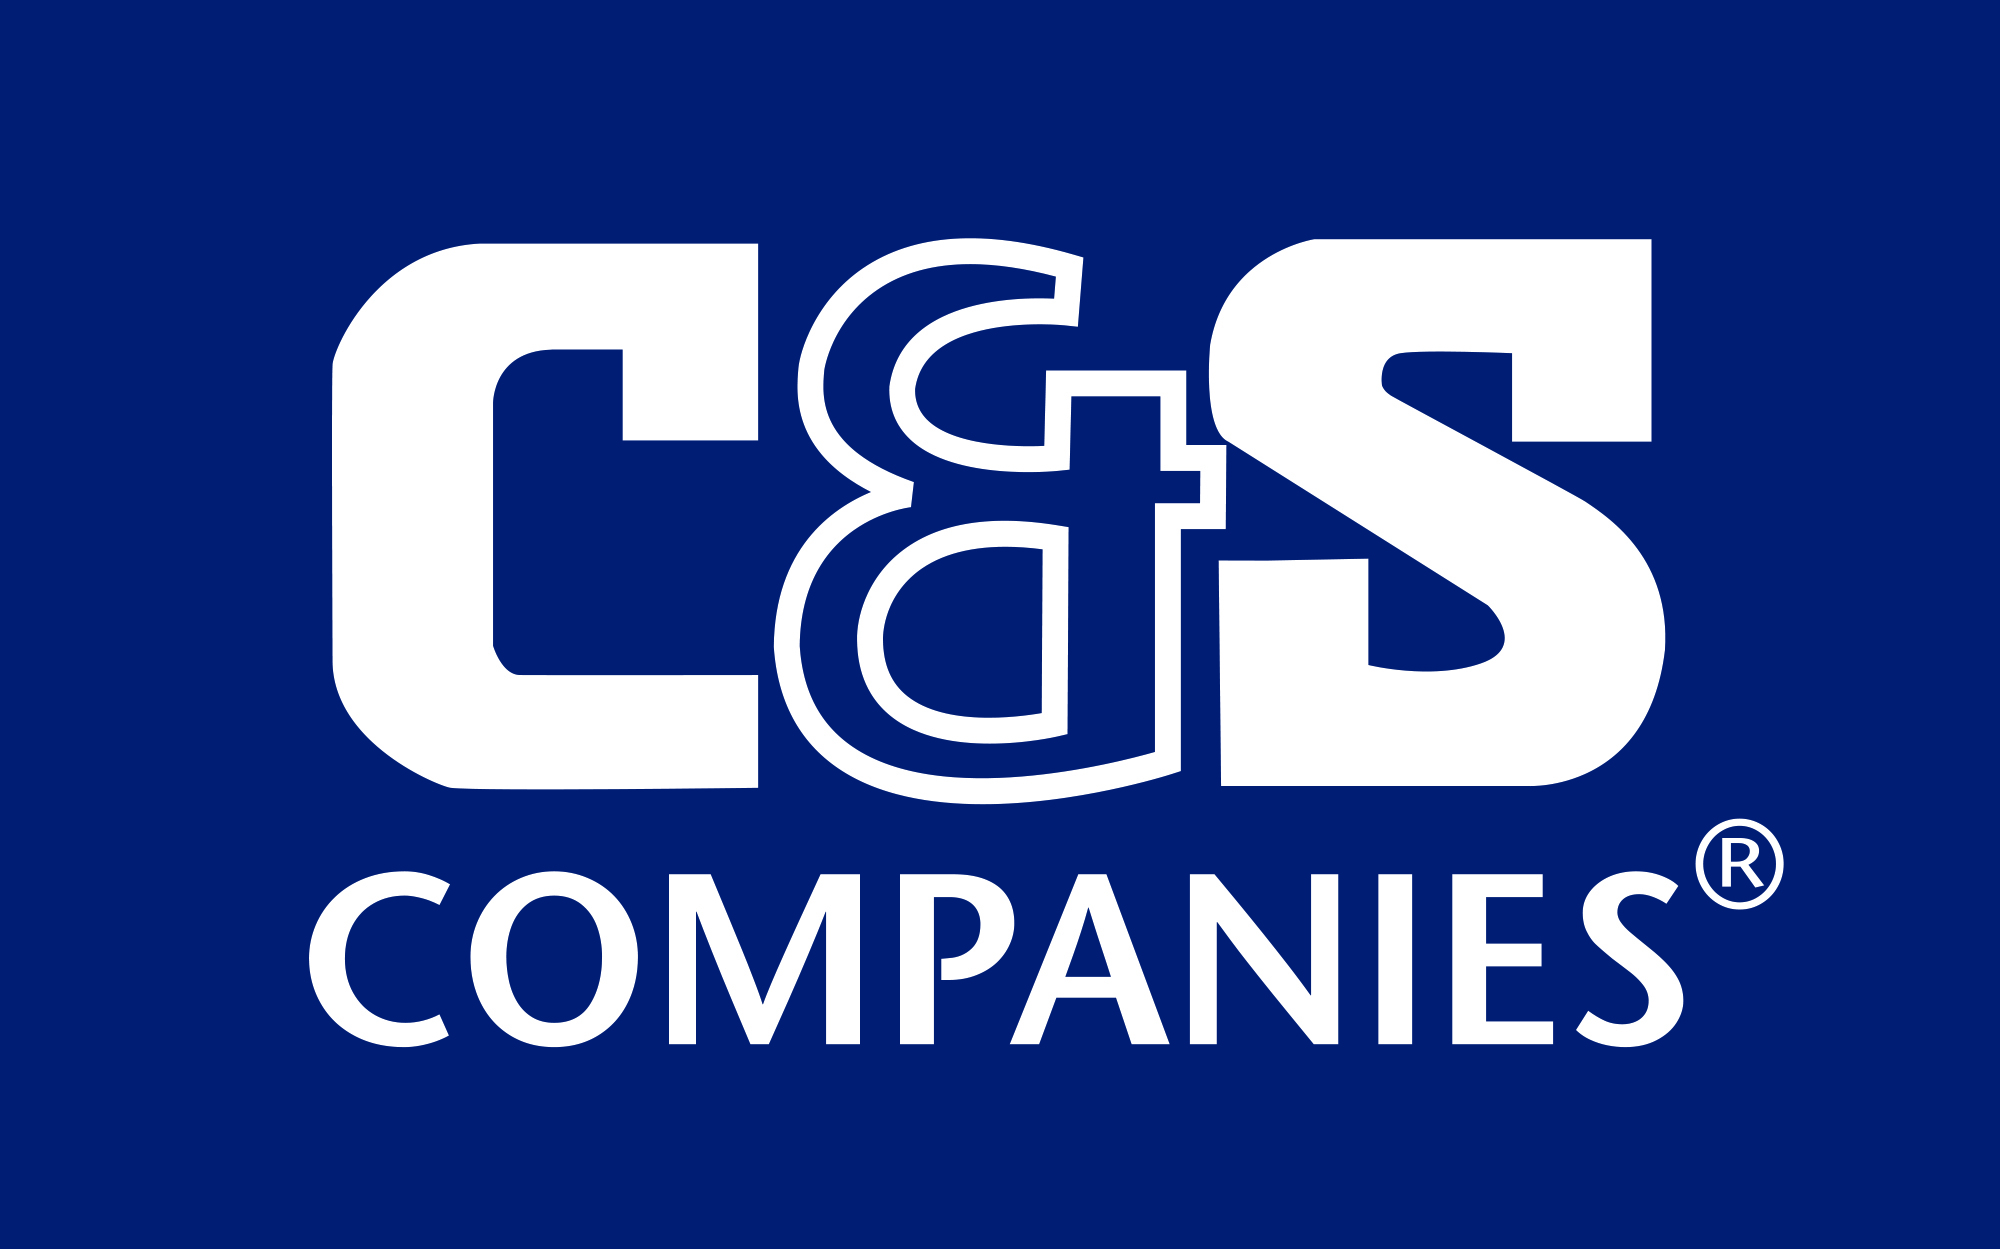 c and s companies